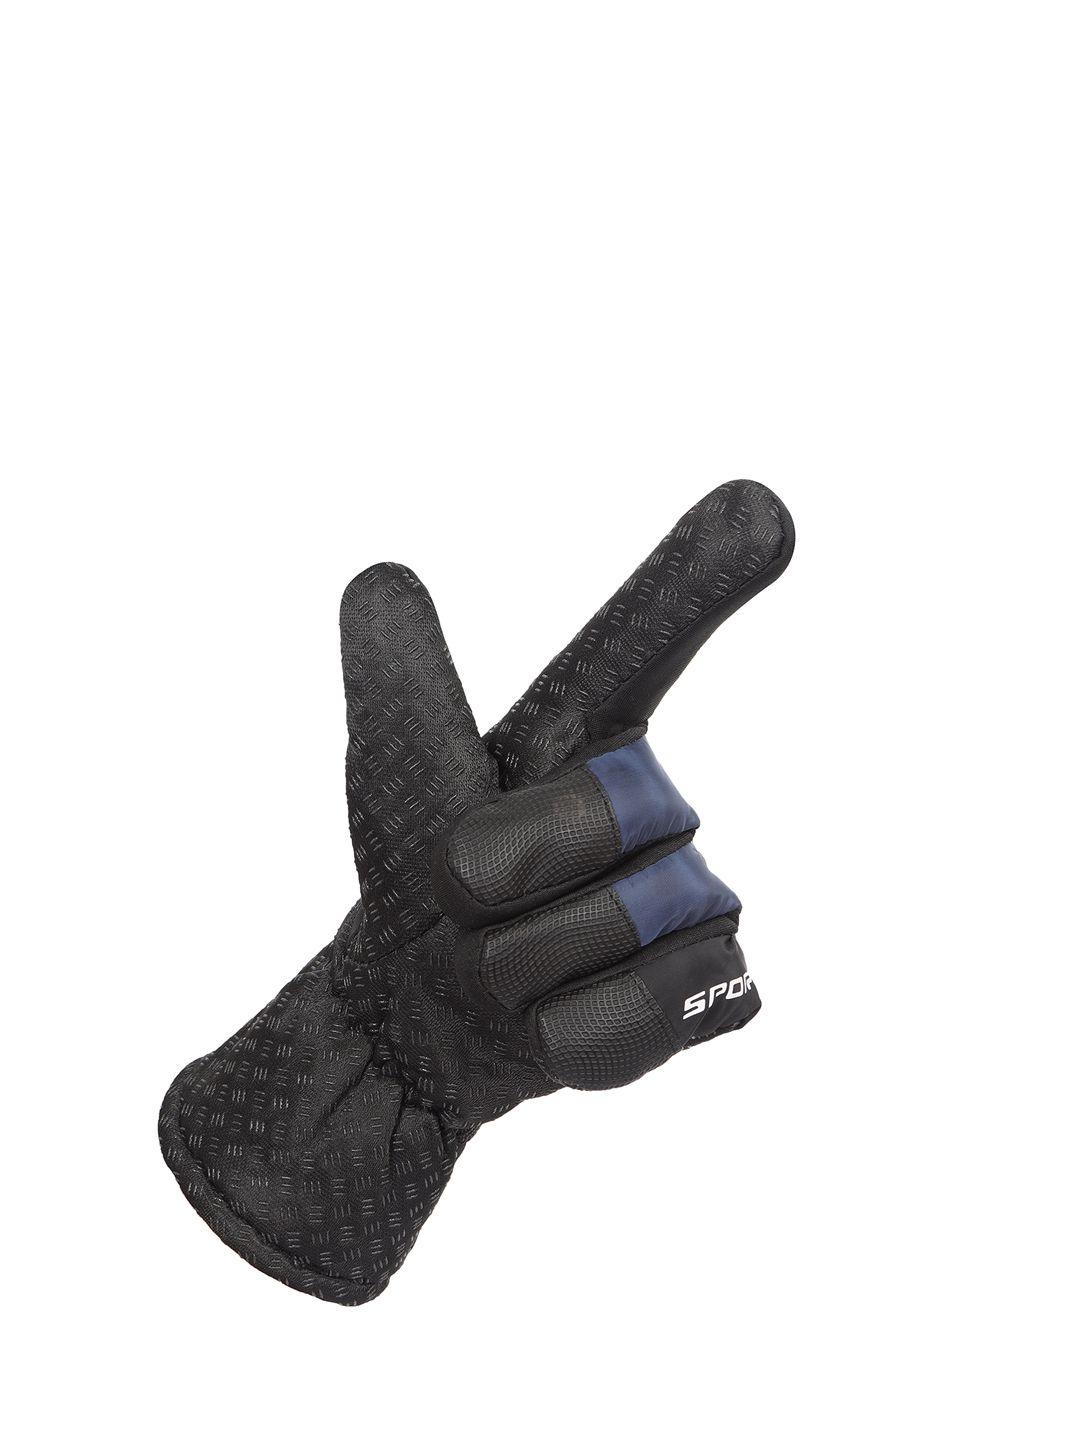 fabseasons blue printed warm winter gloves